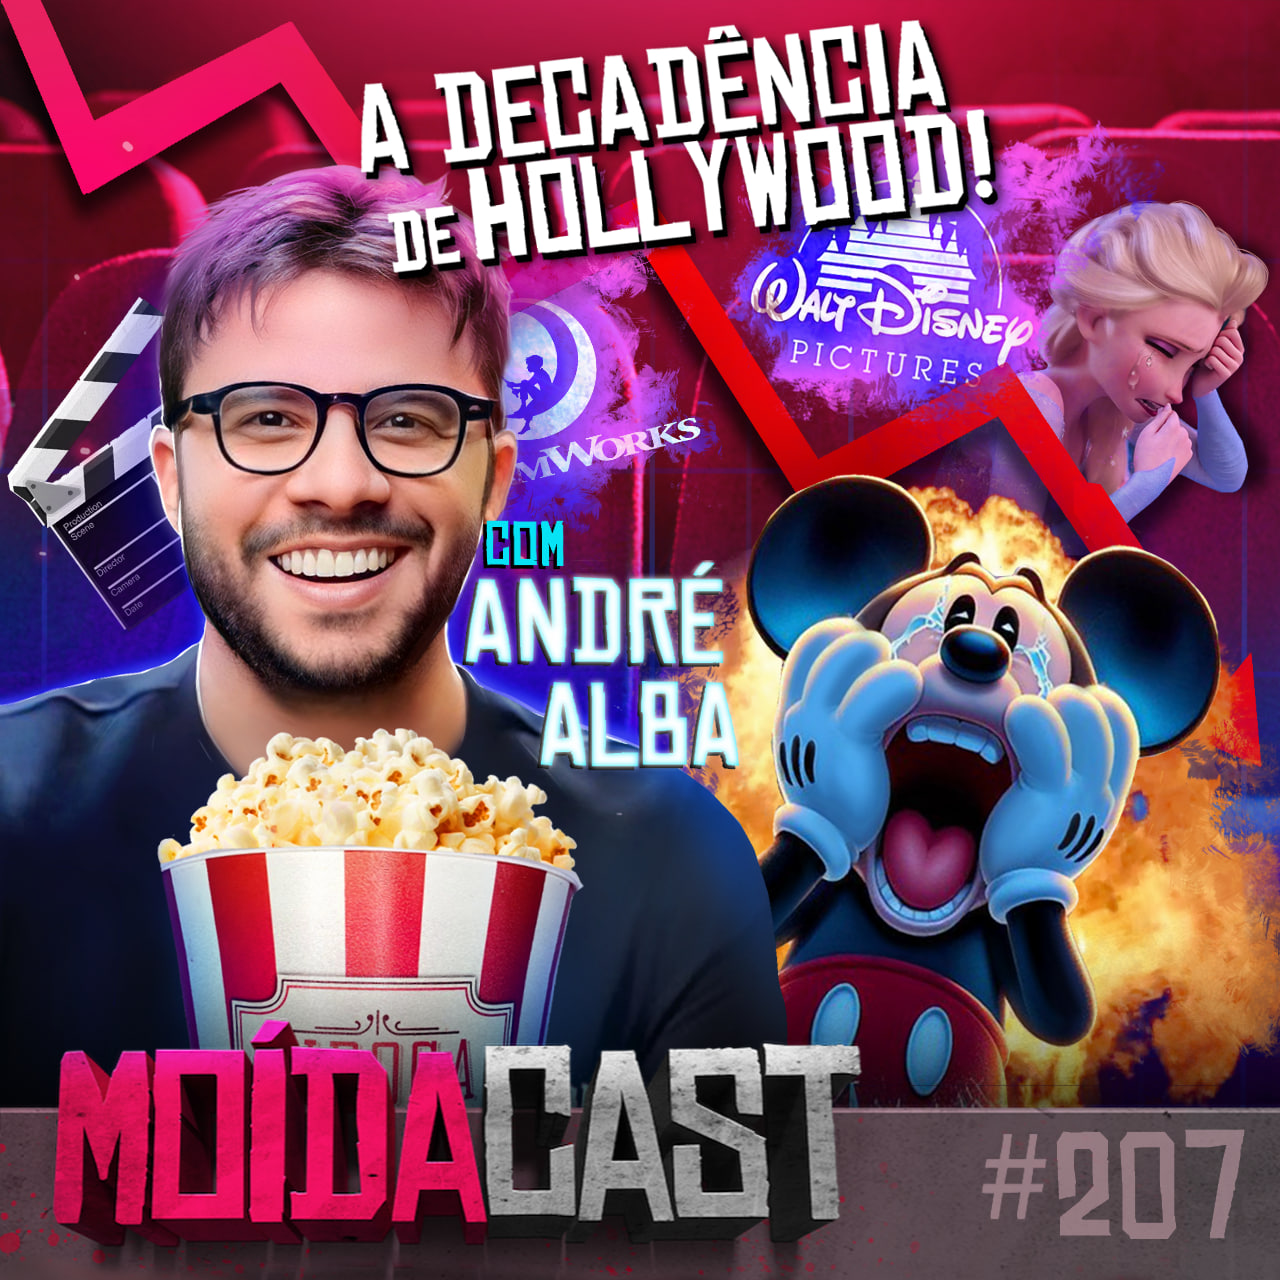 #207 A DECADÊNCIA de HOLLYWOOD! (ft. André Alba)